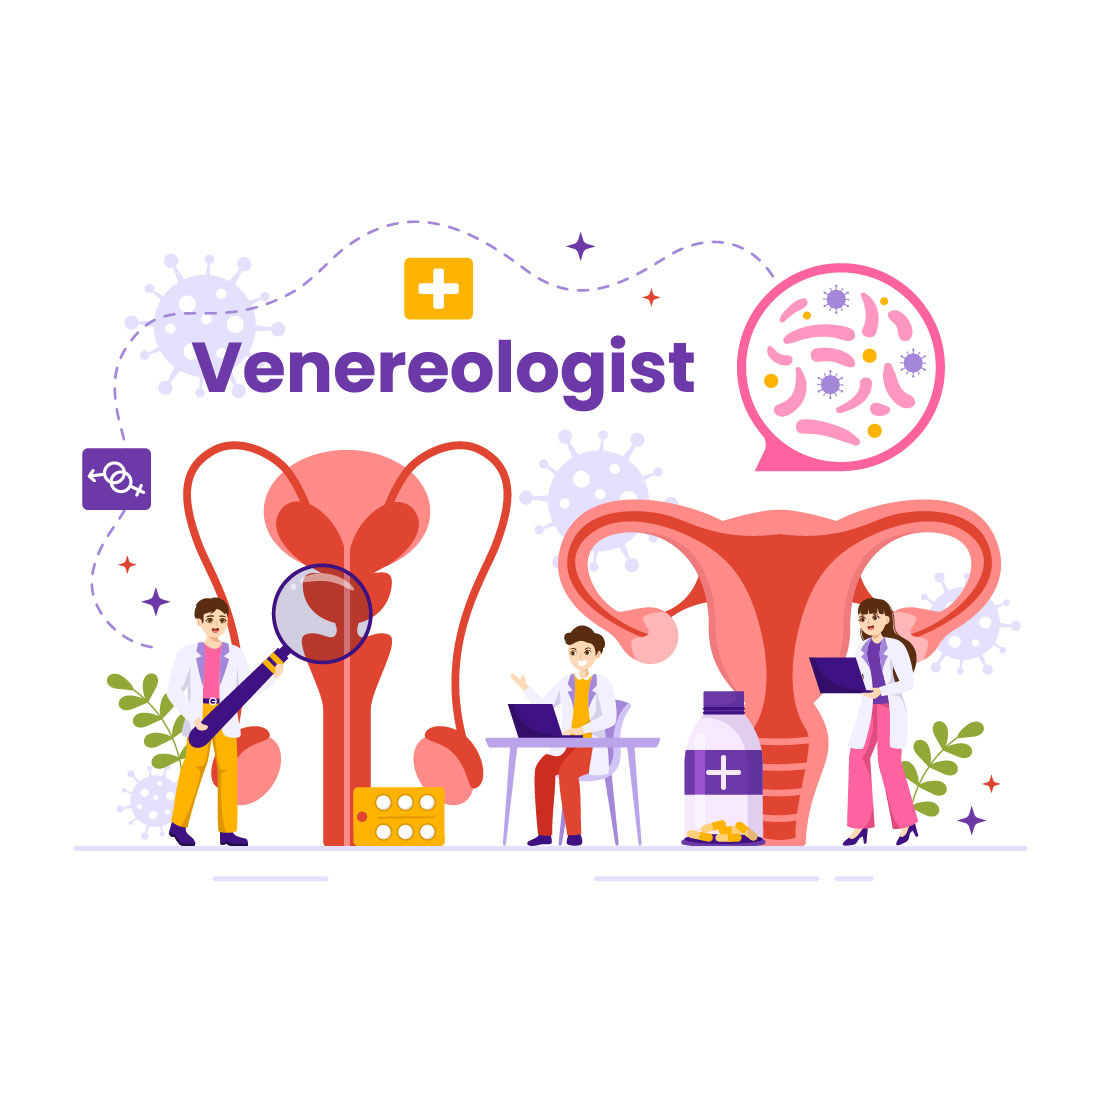 10 Venereologist Diagnostic Illustration preview image.